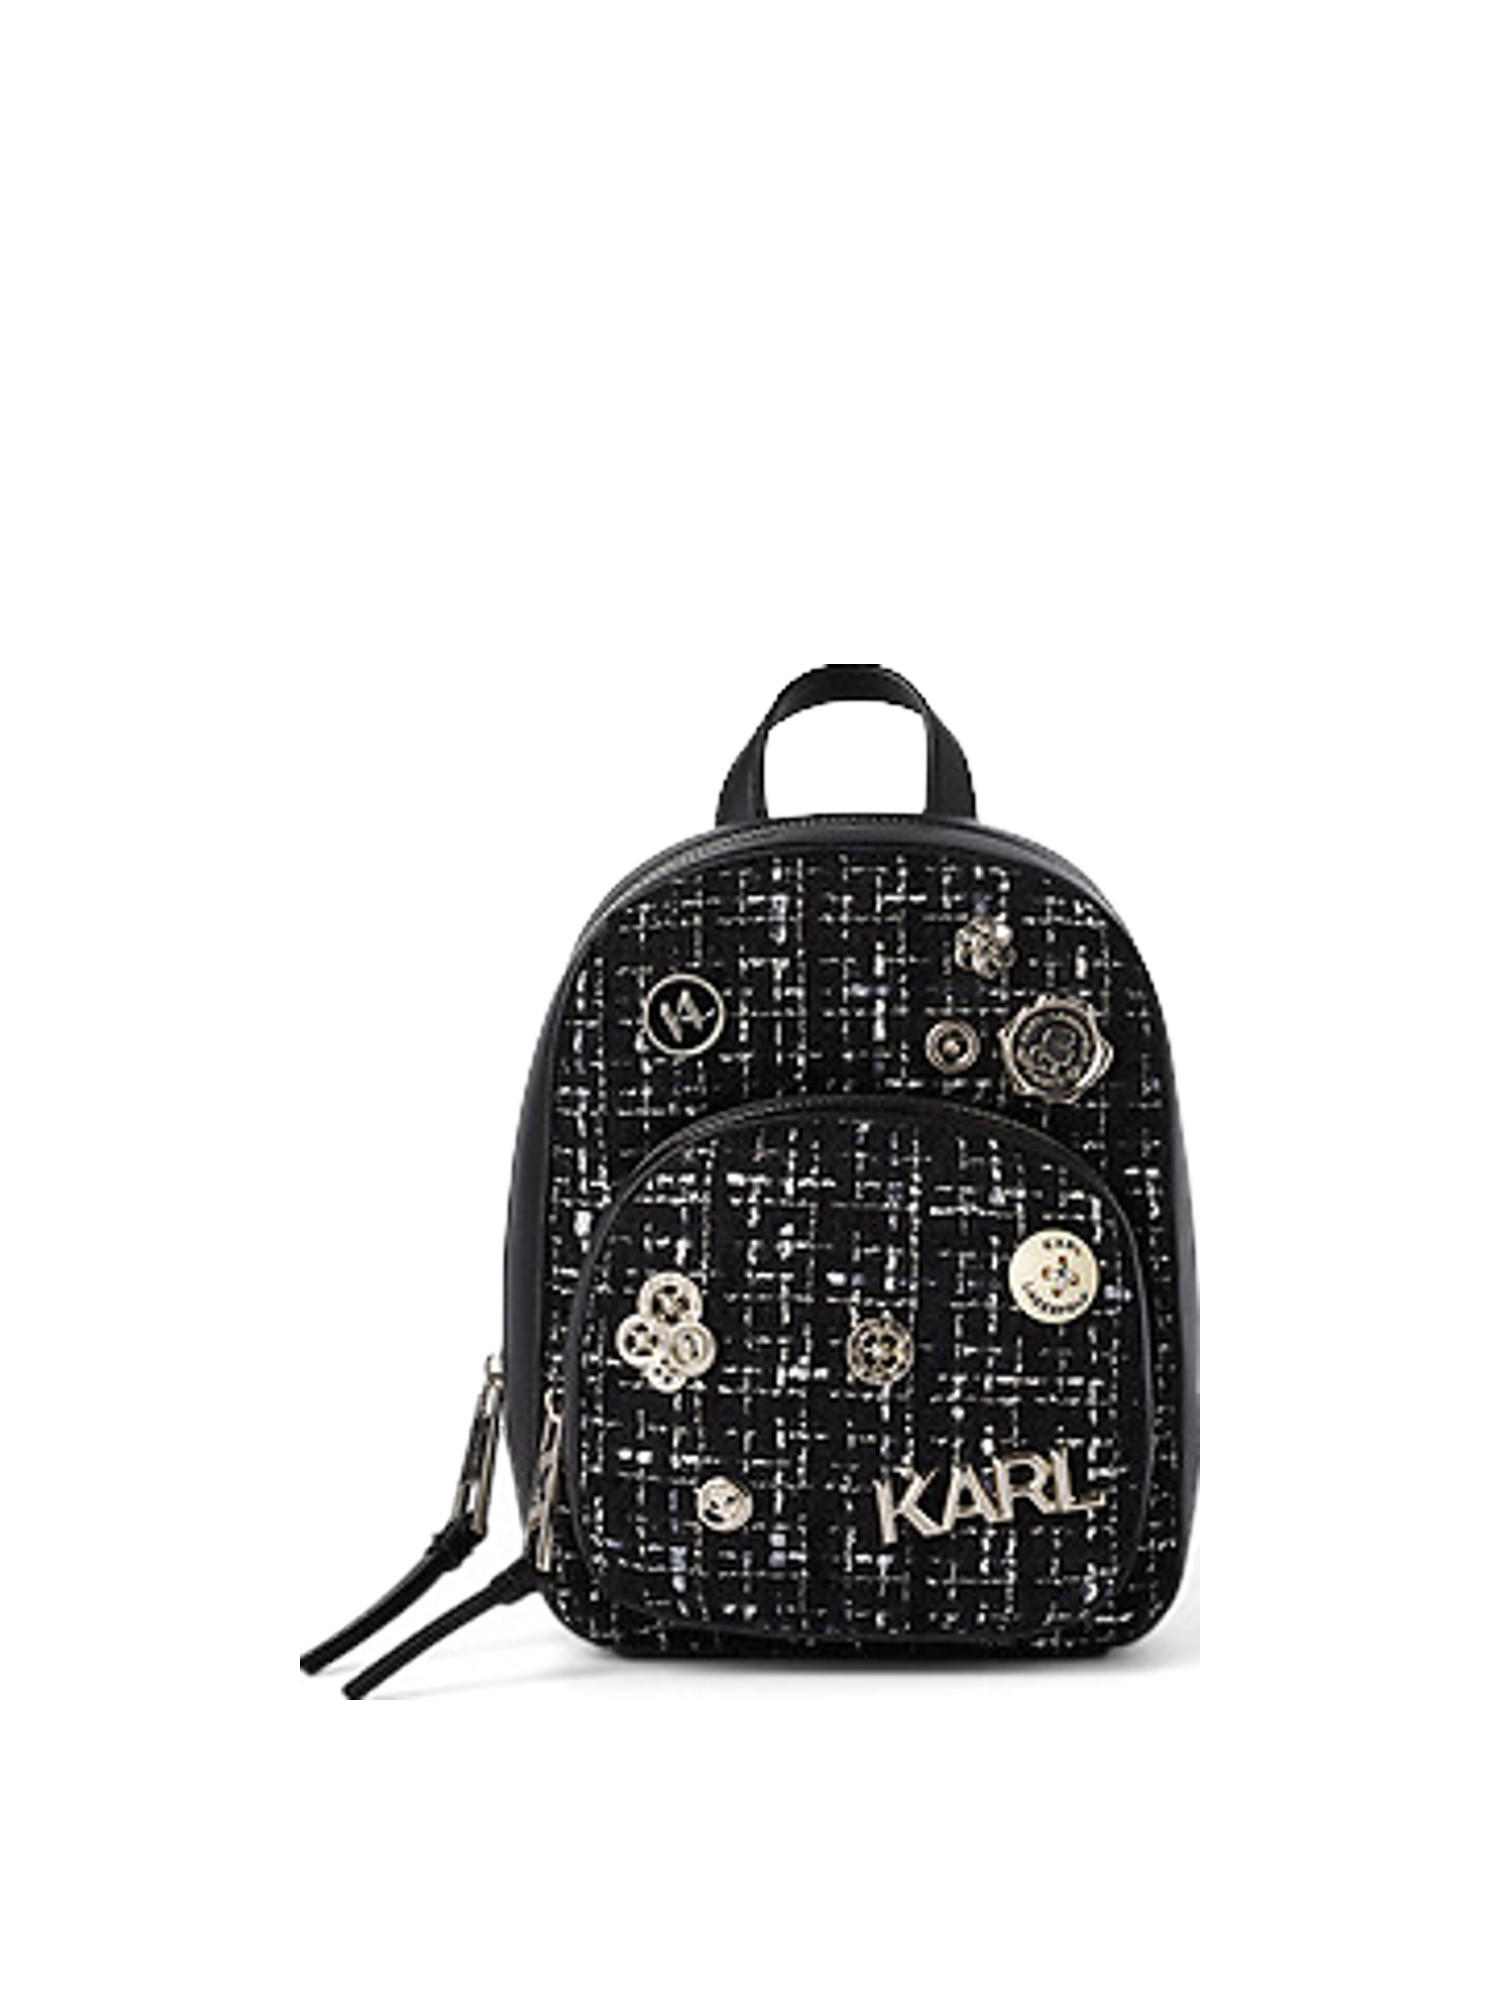 Karl Lagerfeld - Mini bp backpack k/pins boucle, Black, large image number 0